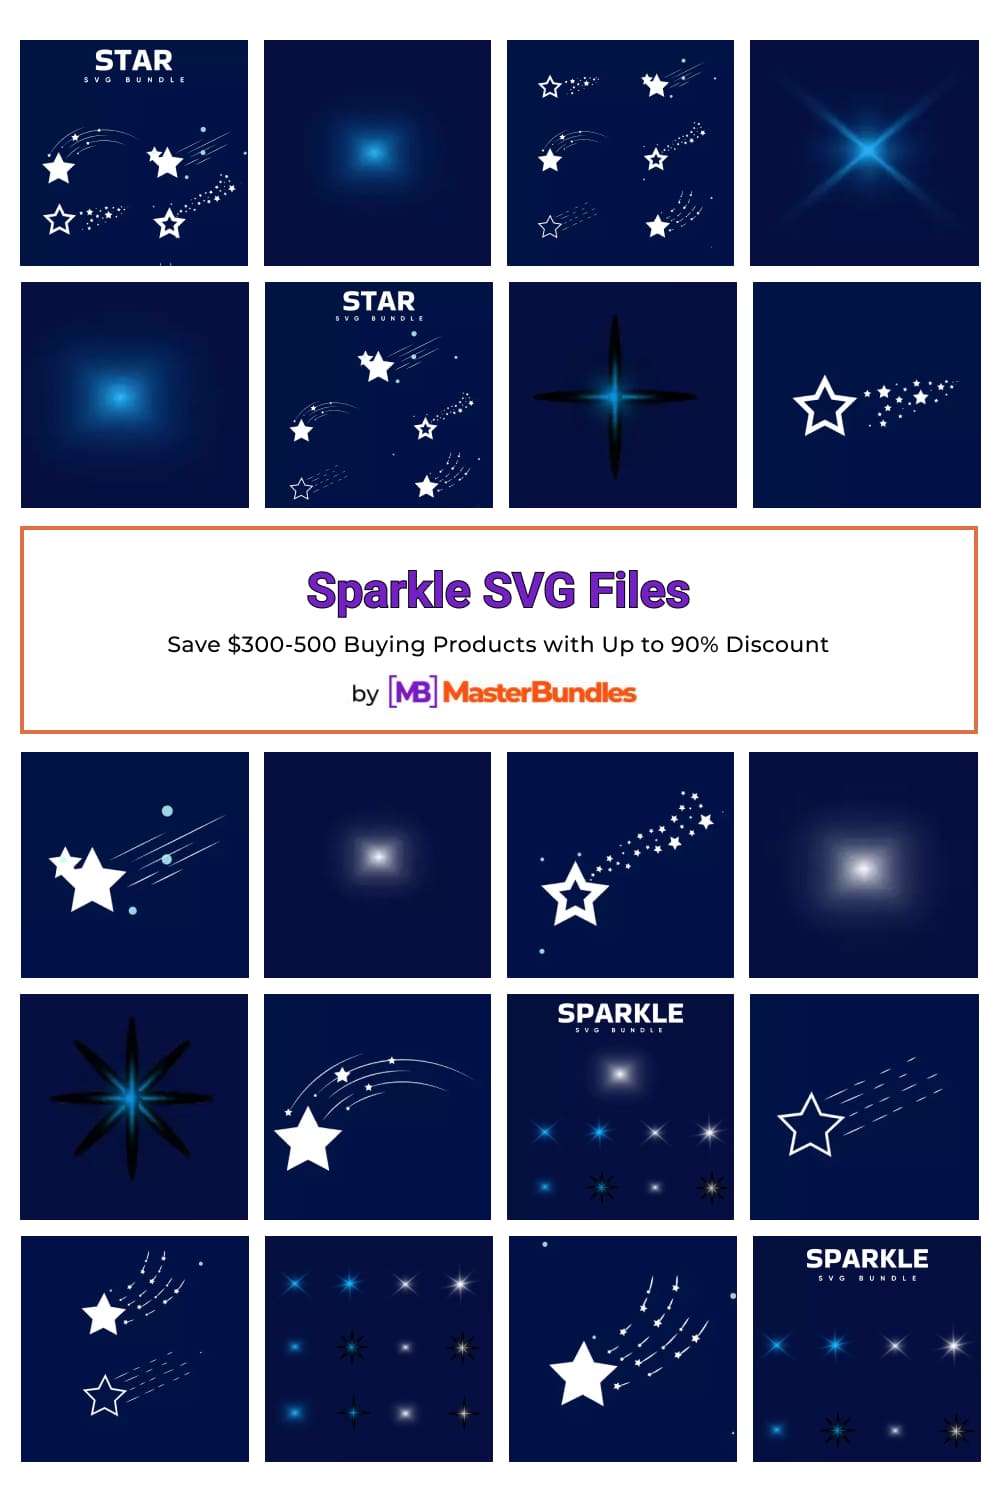 Sparkle SVG Files Pinterest image.